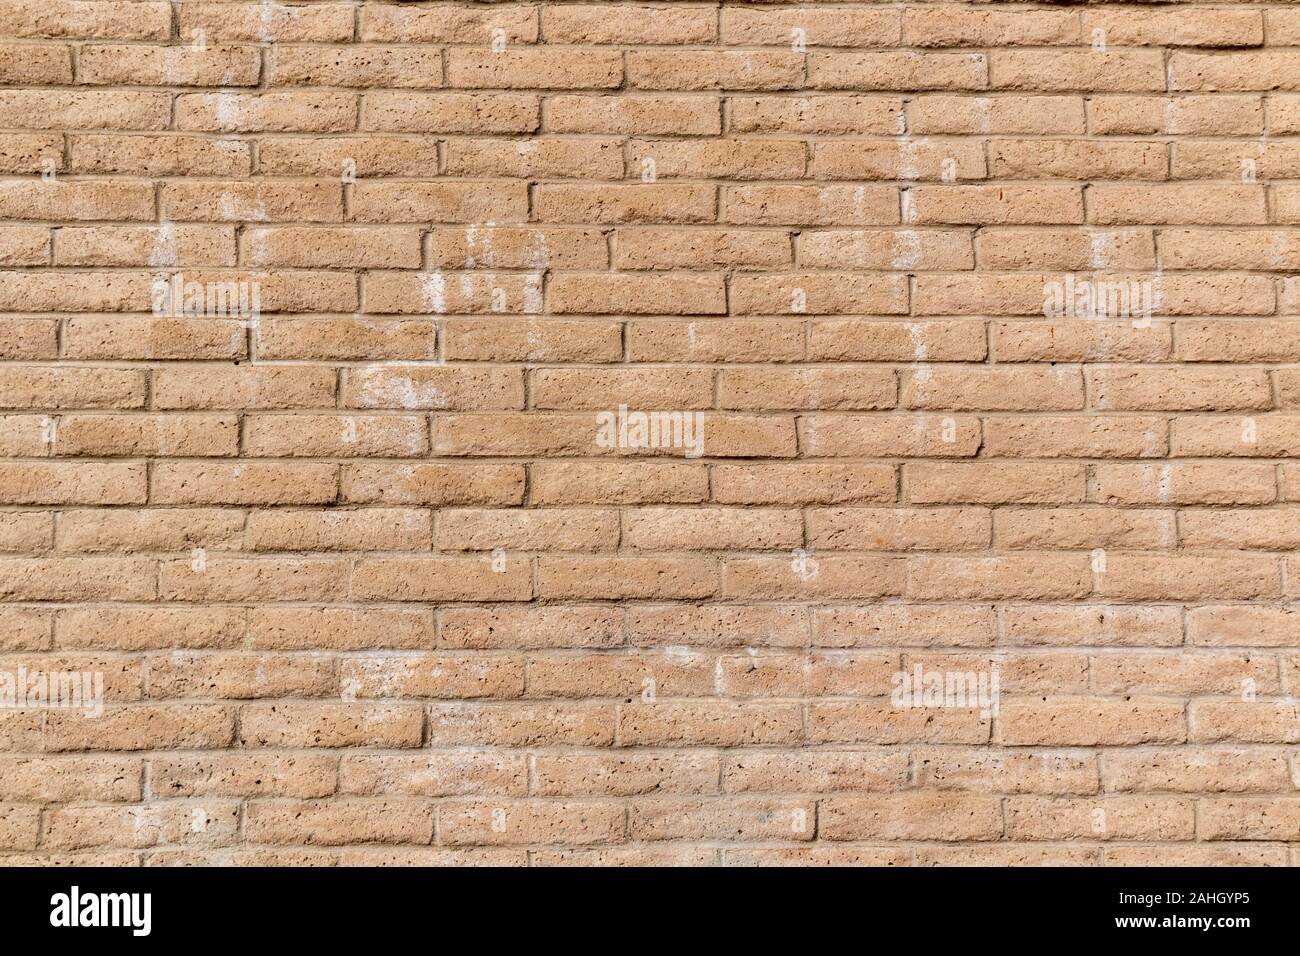 tan brick wall background Stock Photo